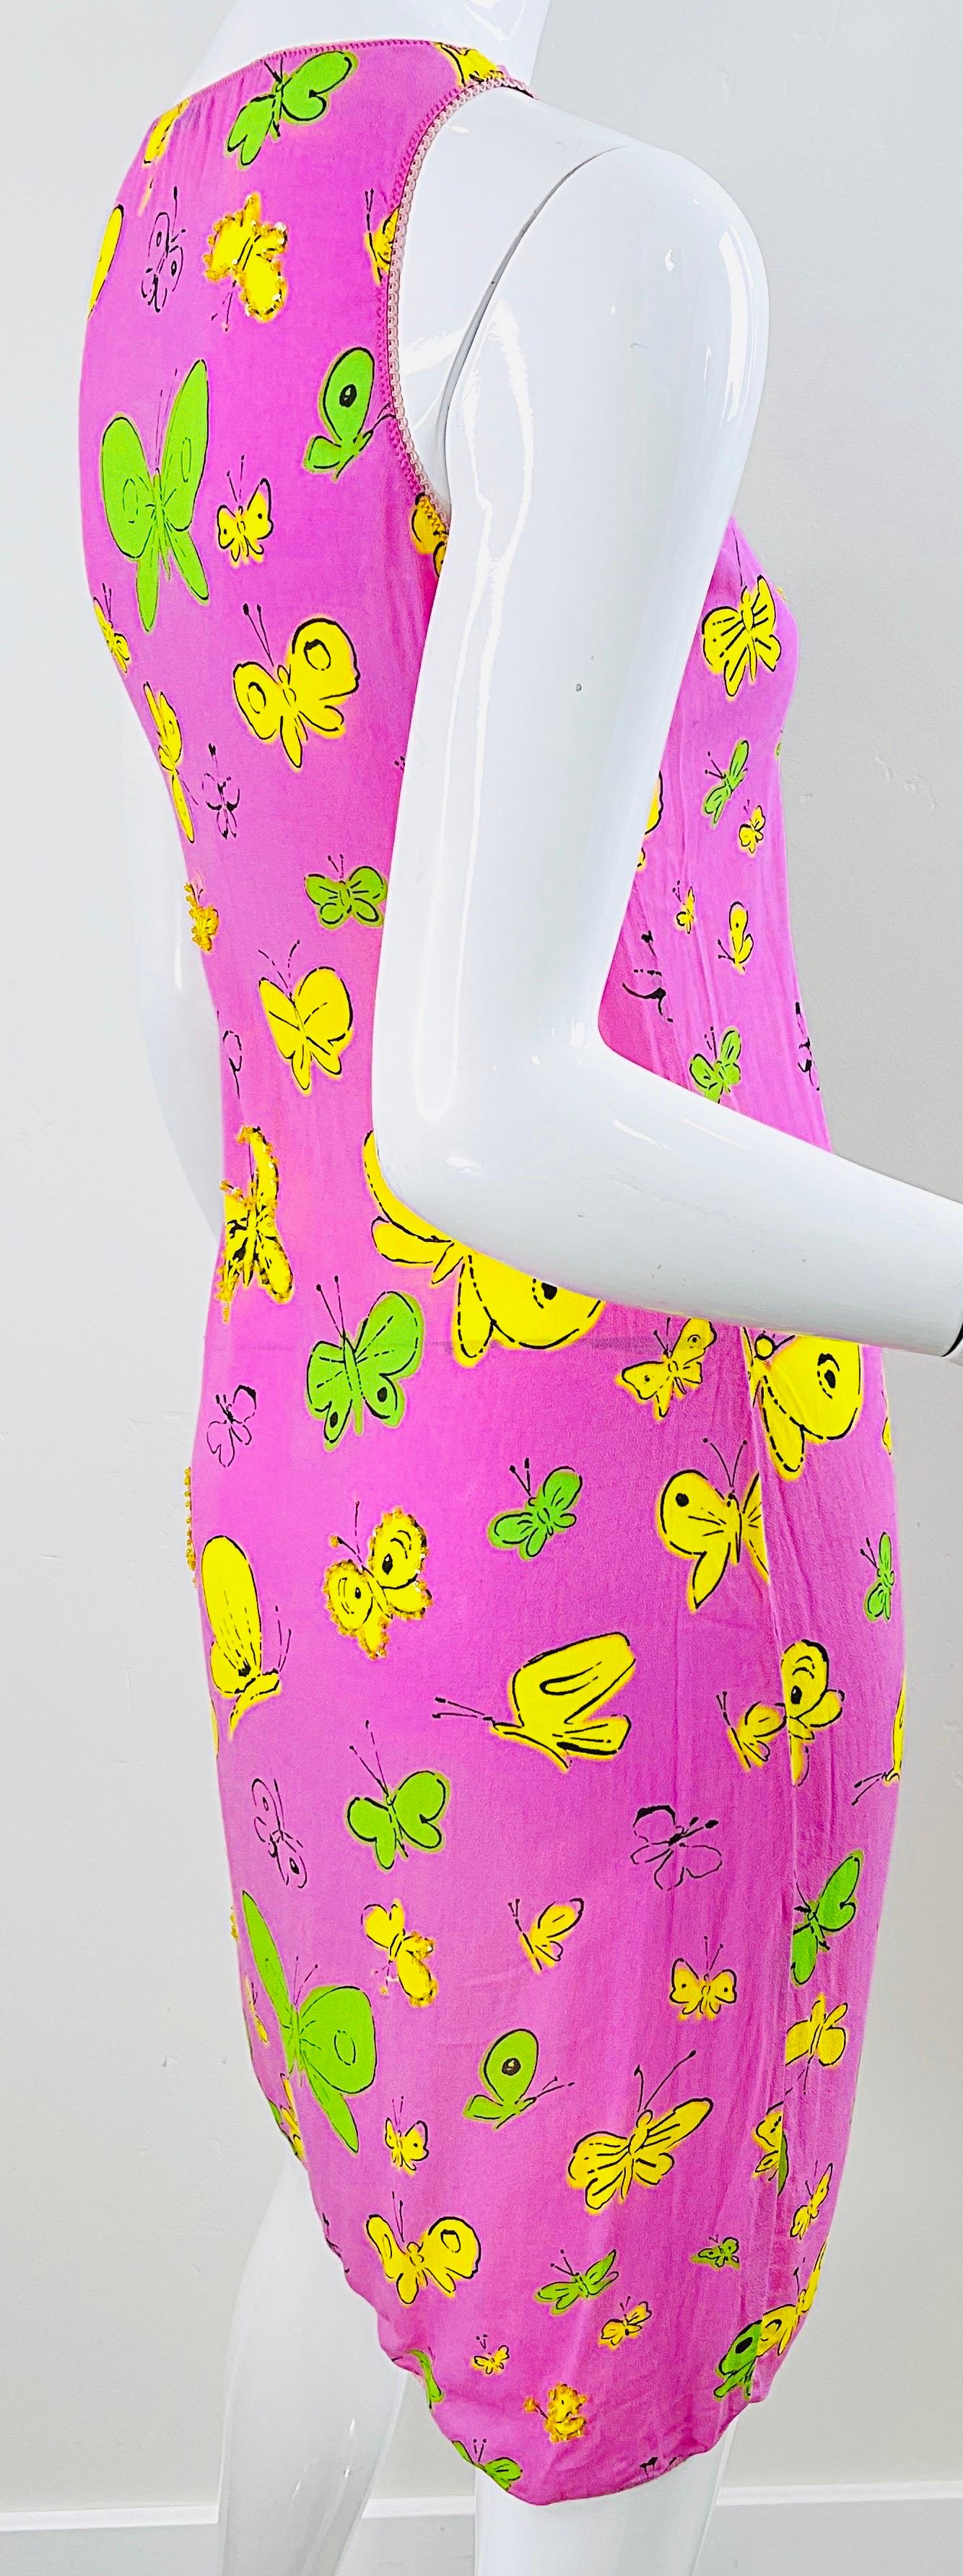 BARBIE 1990s Versus Gianni Versace Bubblegum Pink Beads Butterfly Dress Cardigan For Sale 12